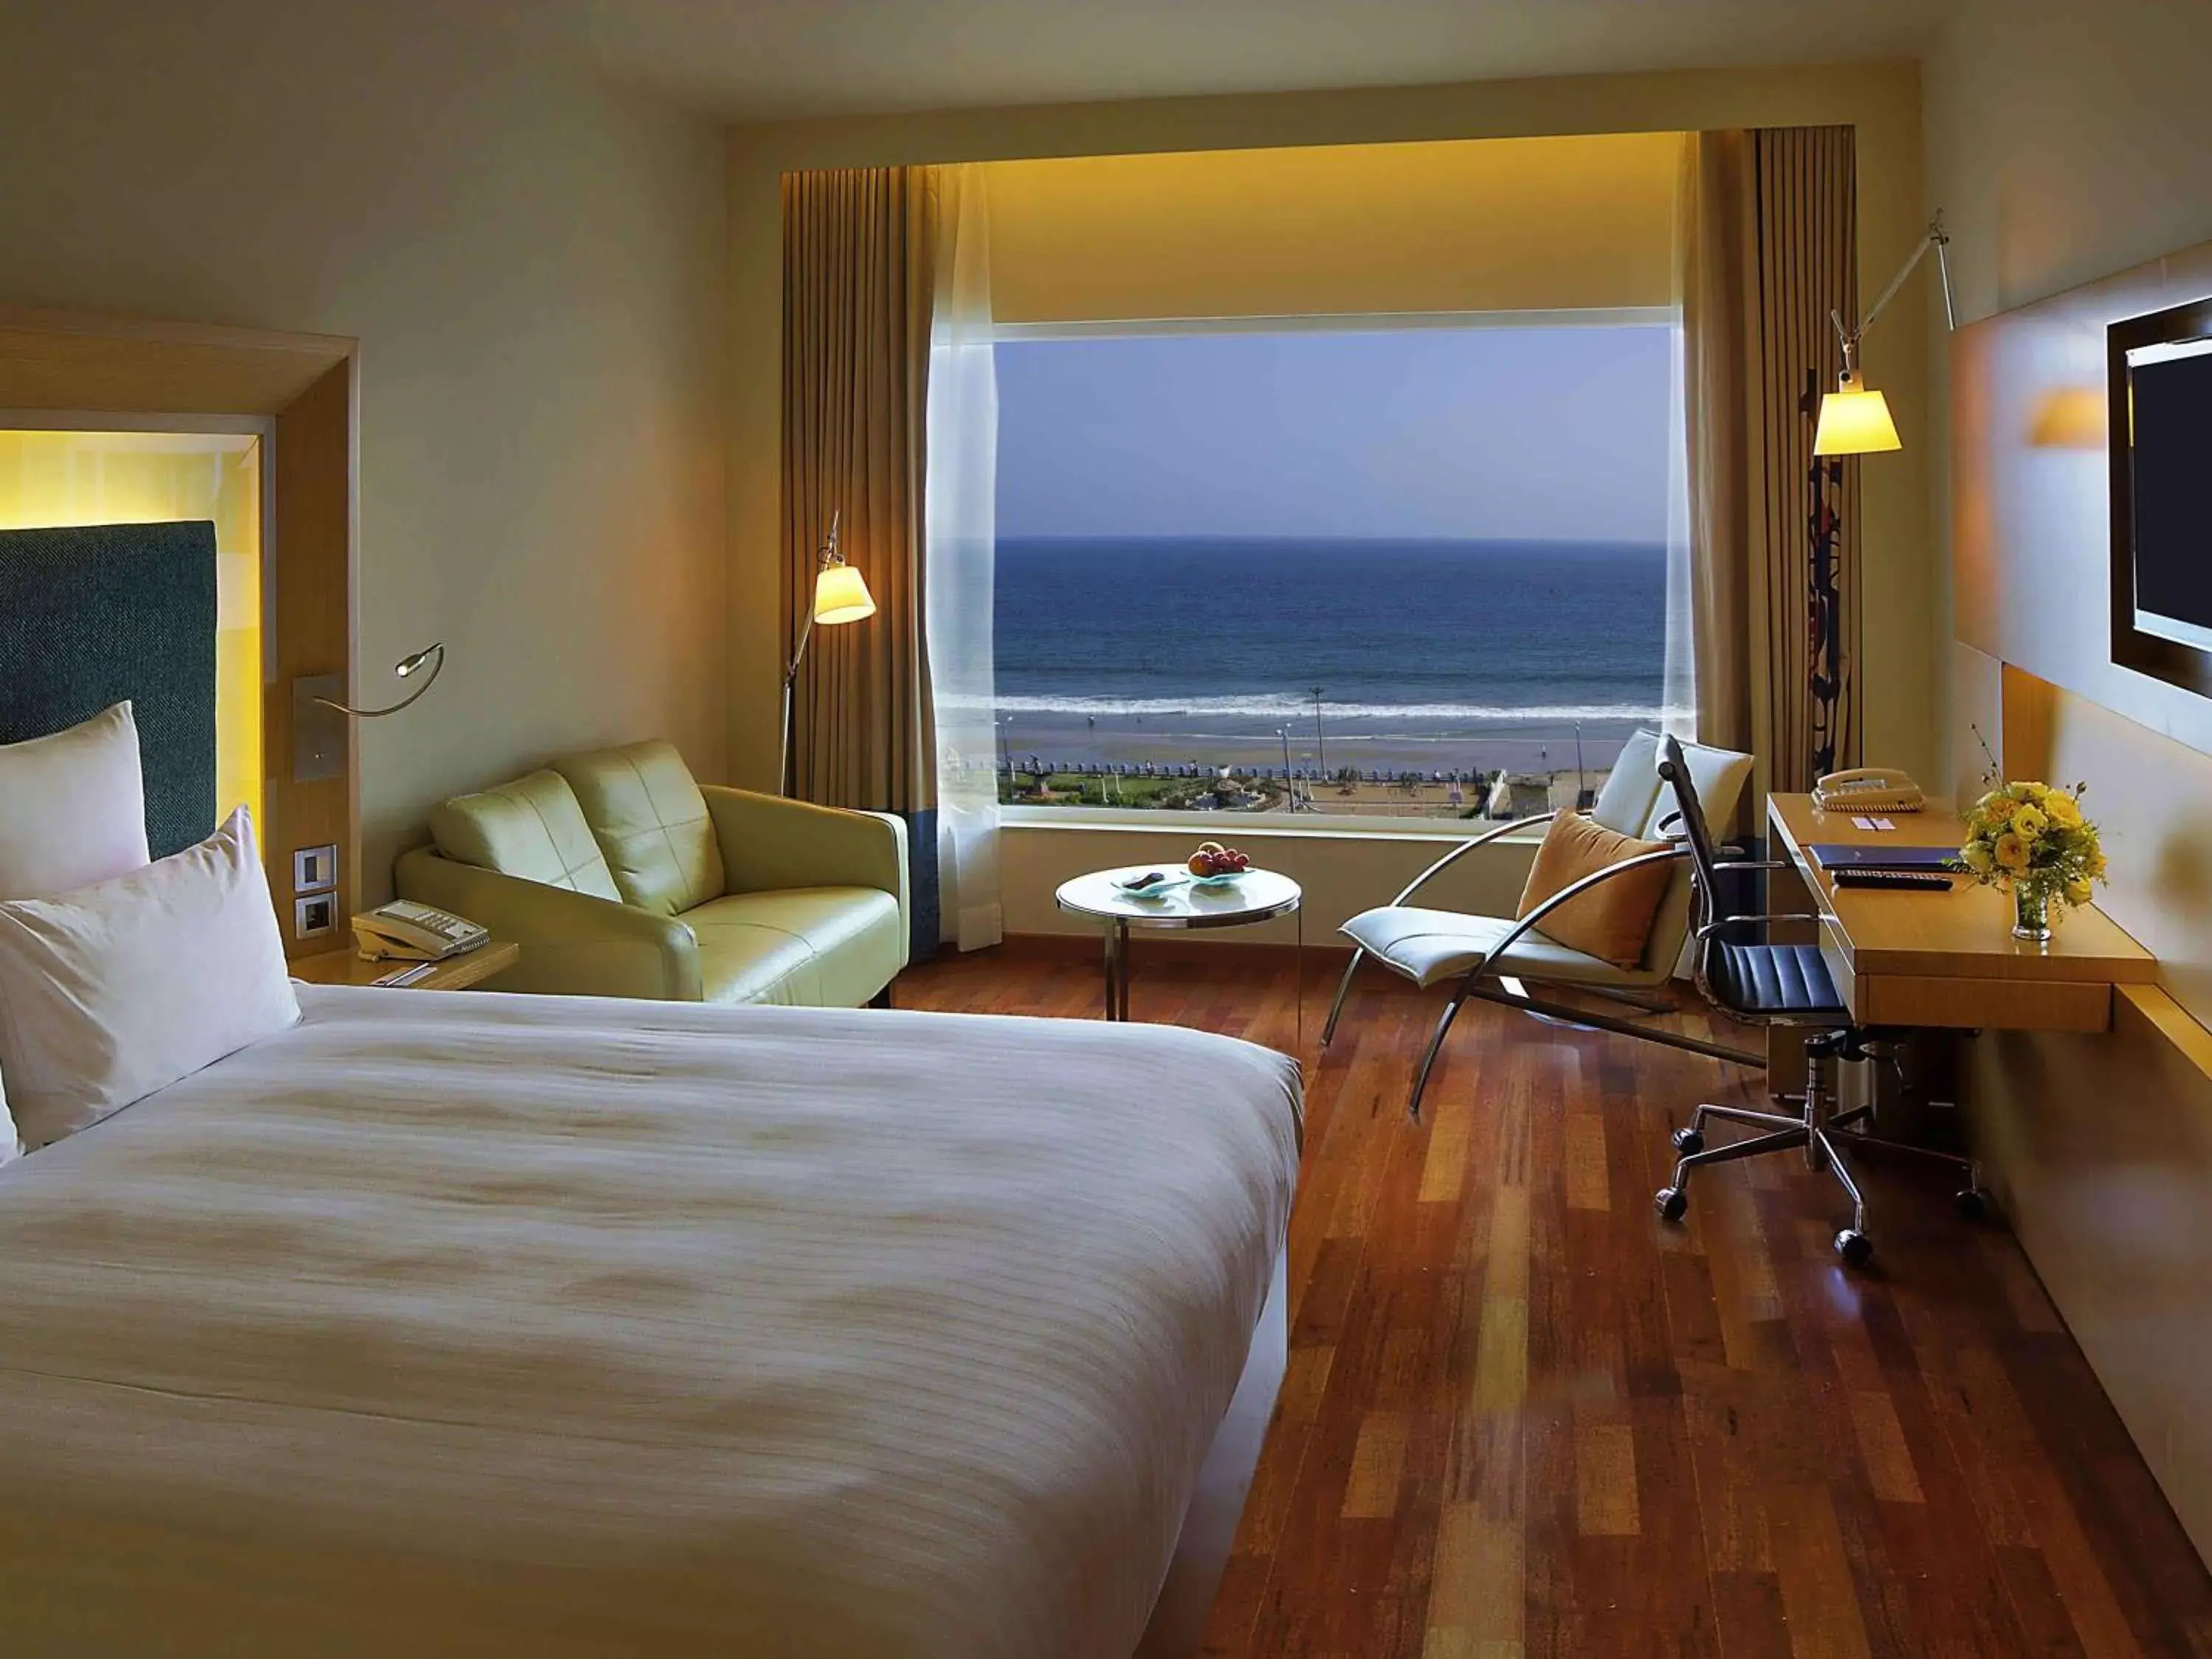 Superior Queen Room with Ocean View - single occupancy in Novotel Visakhapatnam Varun Beach